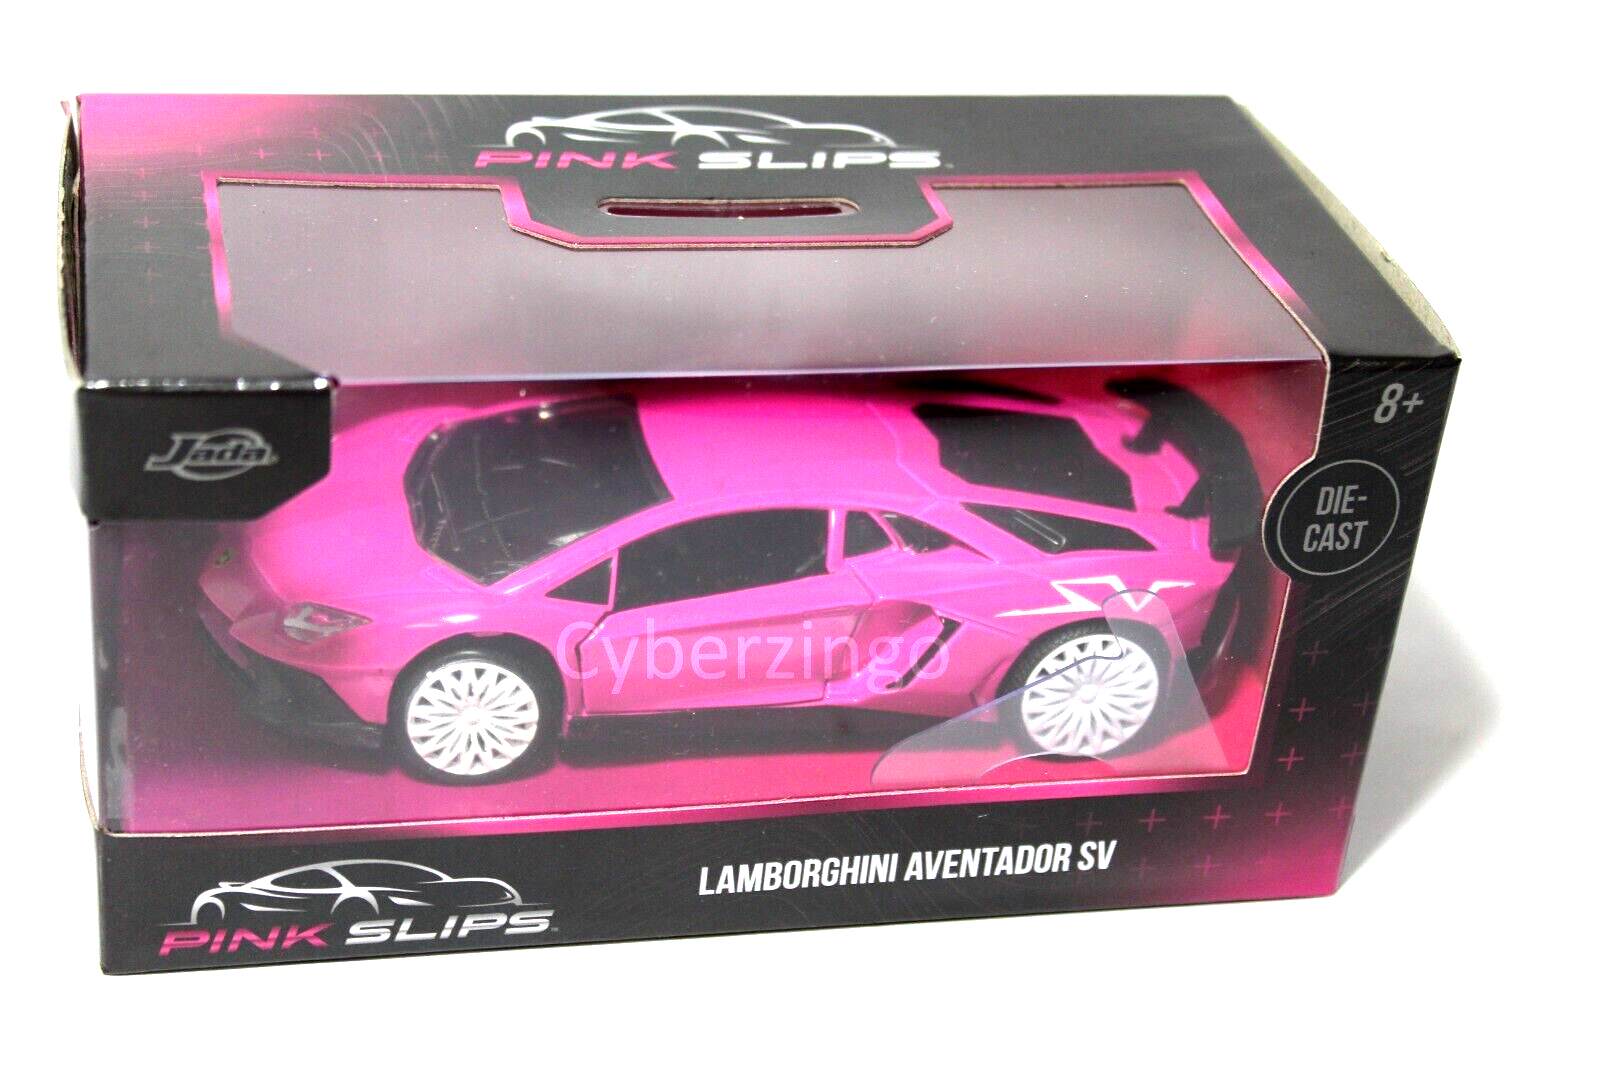 Jada 1/32 Pink Slips Lamborghini Aventador SV Diecast Model Car NEW IN PACKAGE - $19.99